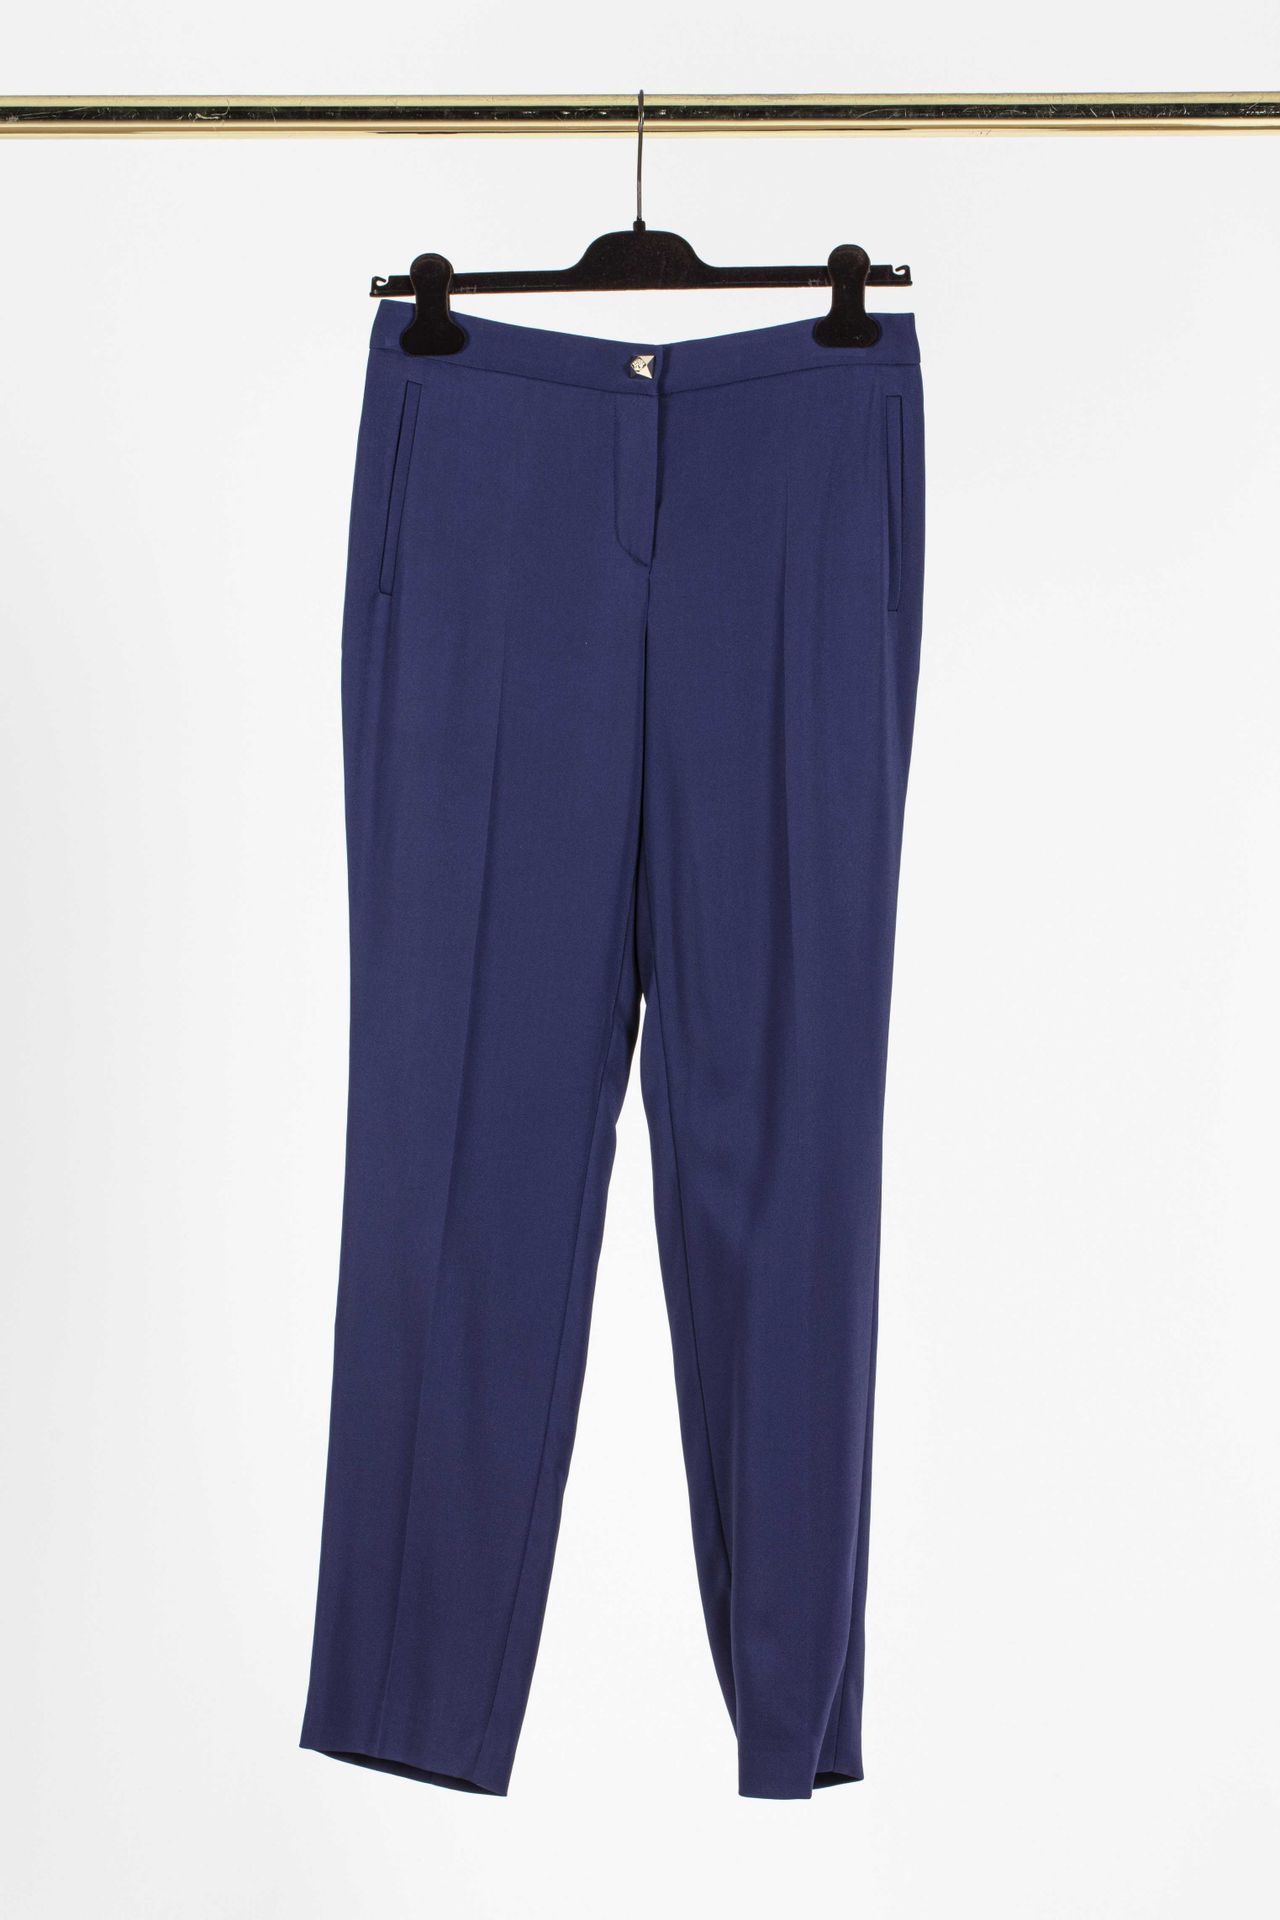 Null VERSACE：蓝色粘胶长裤，金色金属纽扣封口，两个侧袋。 

T .36